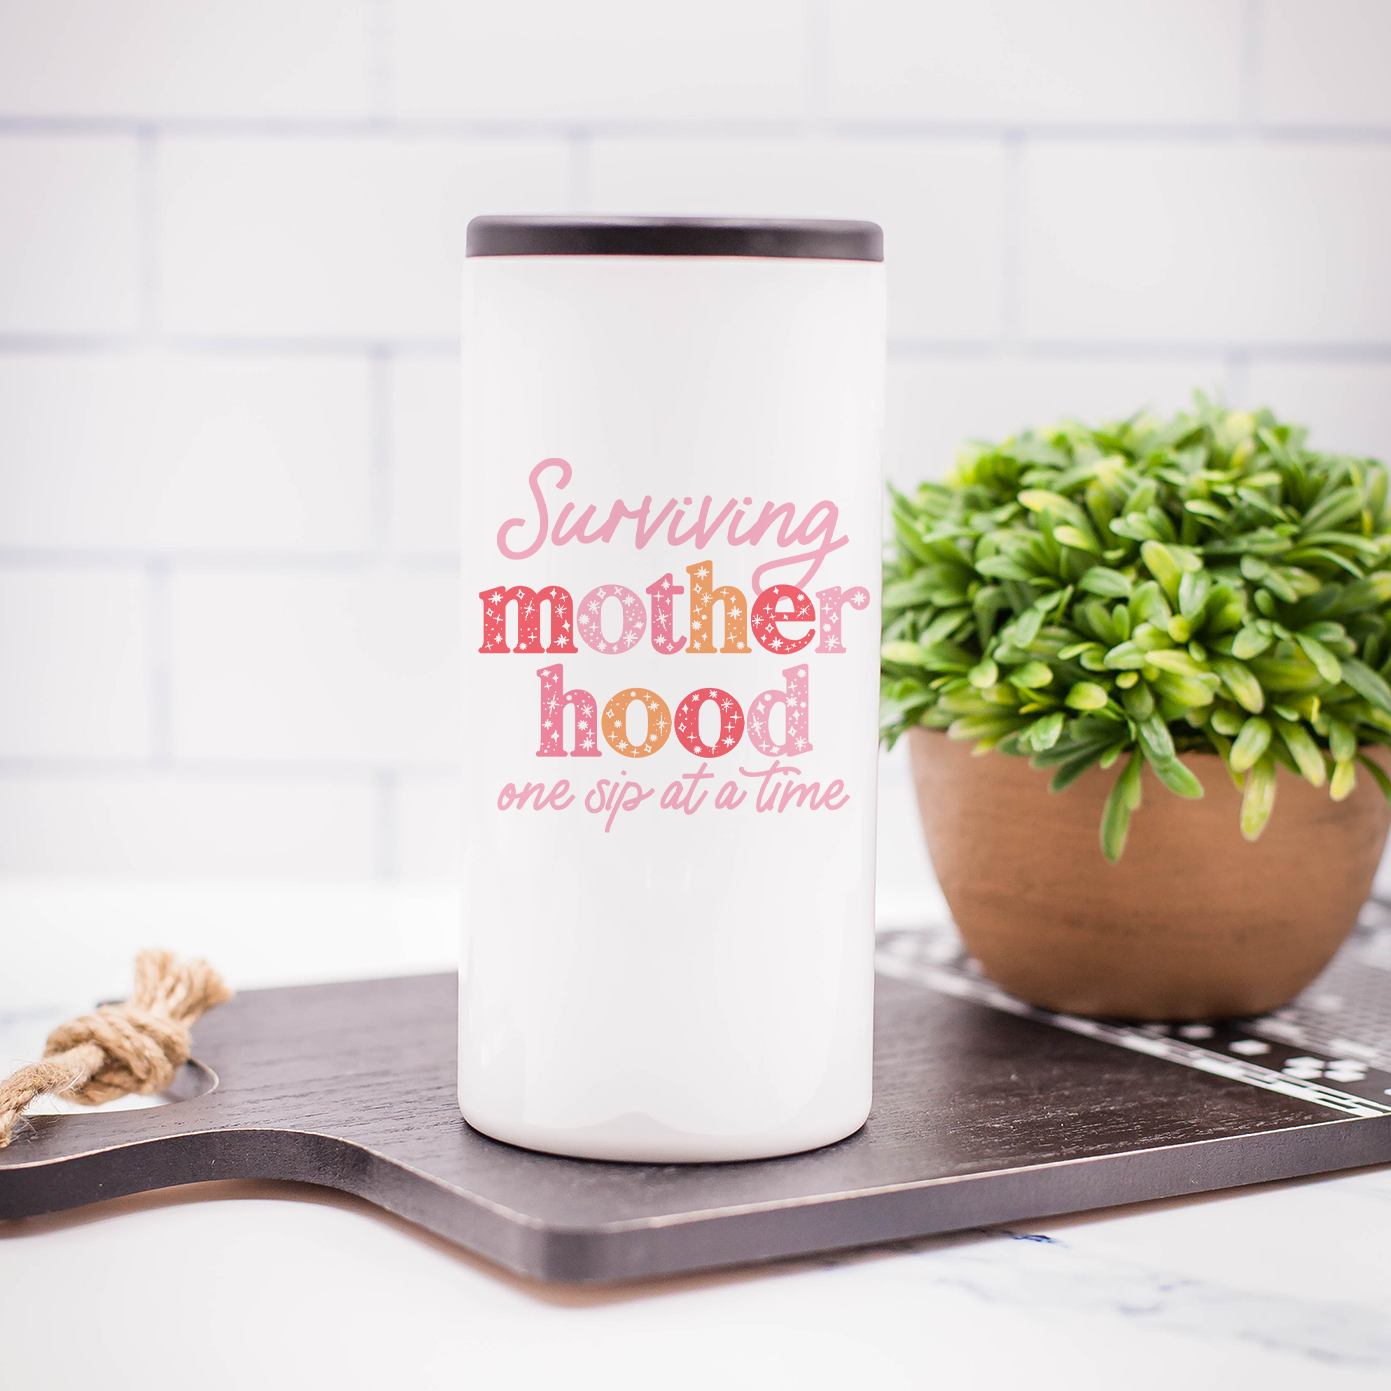 Tired Mom Vibes Mason Jar Coffee Cup, Southern Coffee Mug